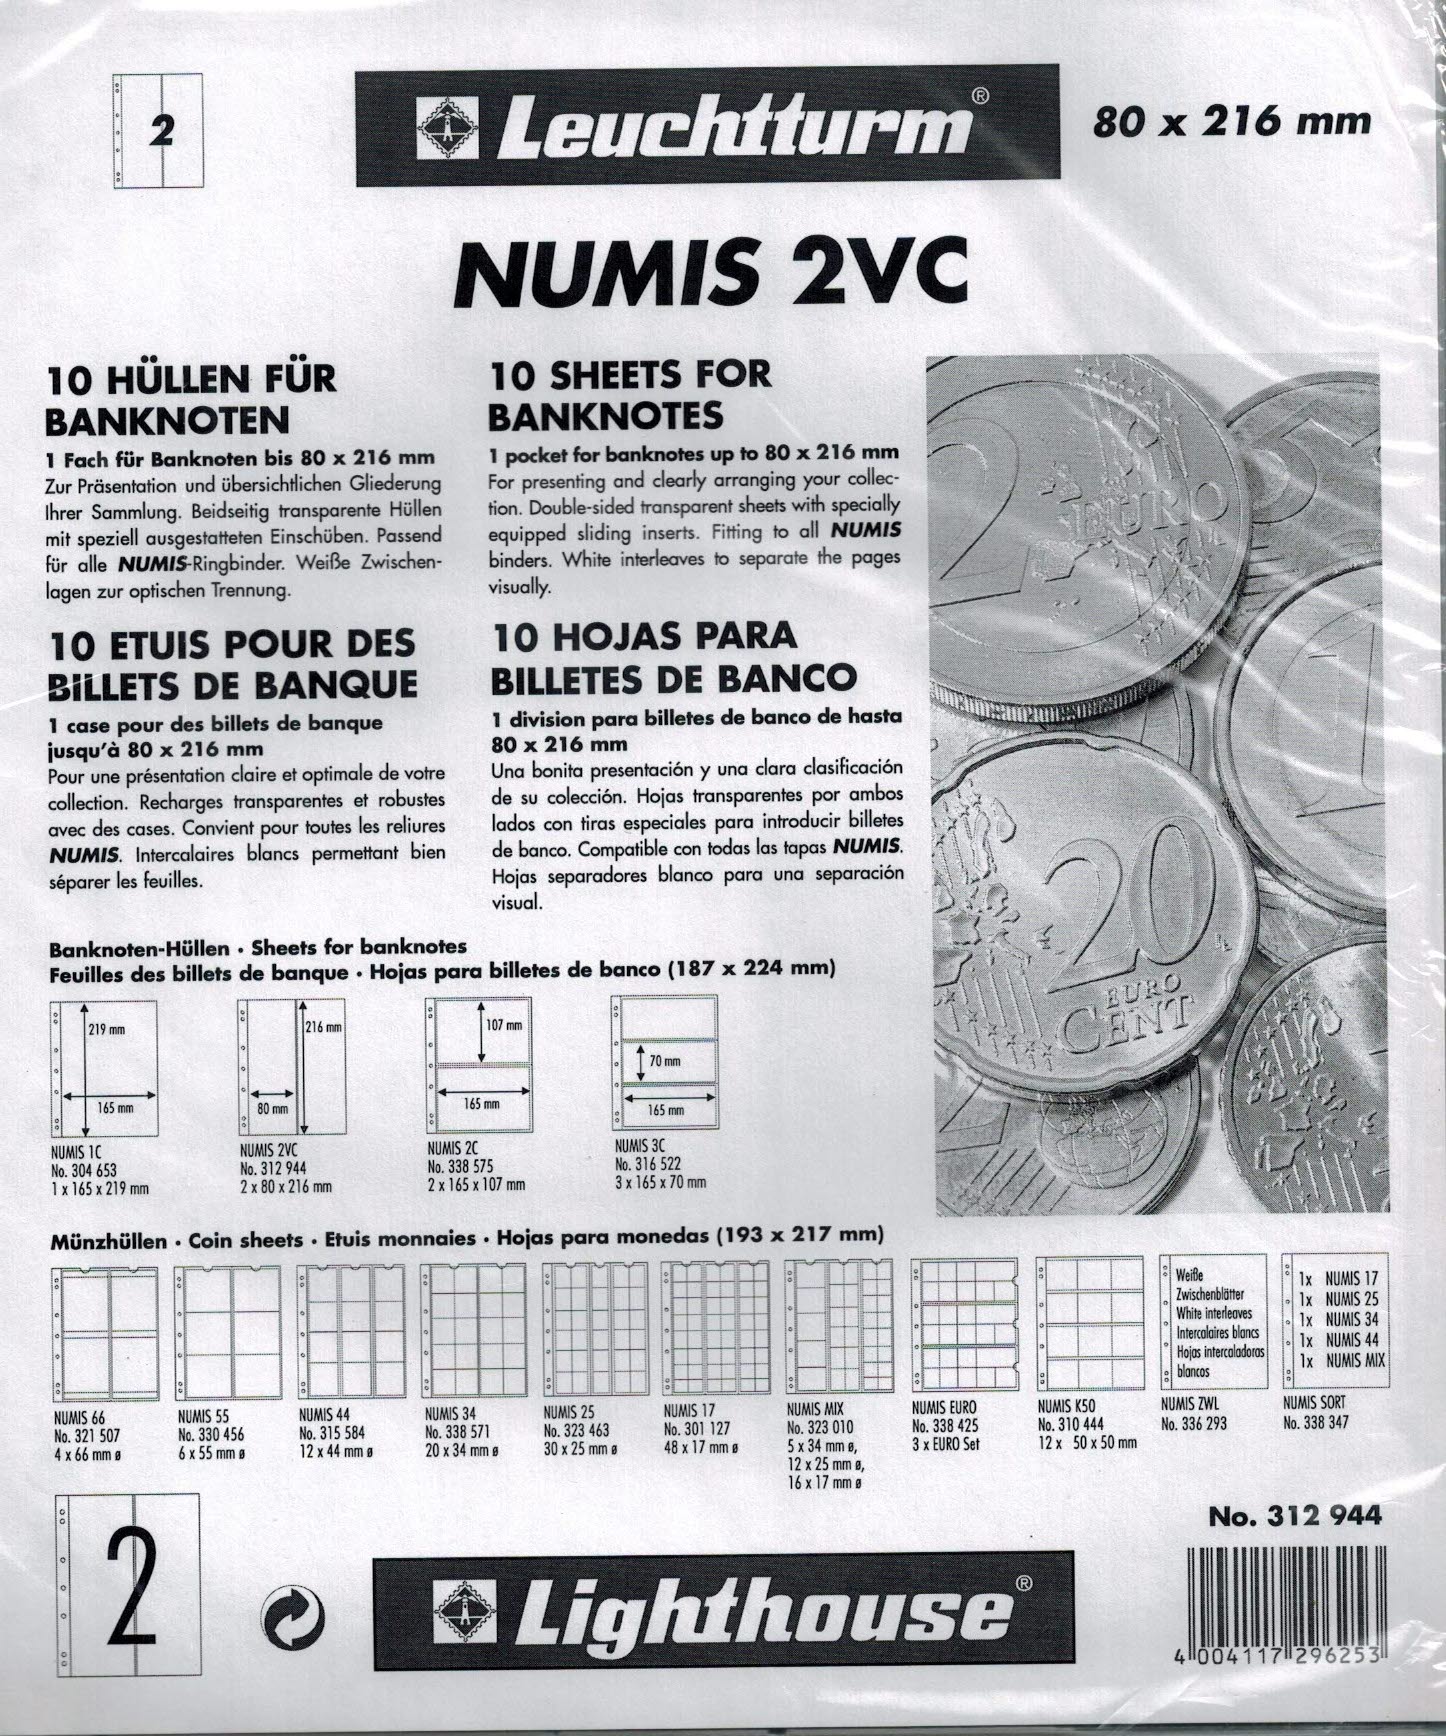 Folhas NUMIS para notas de banco at 80x216 mm